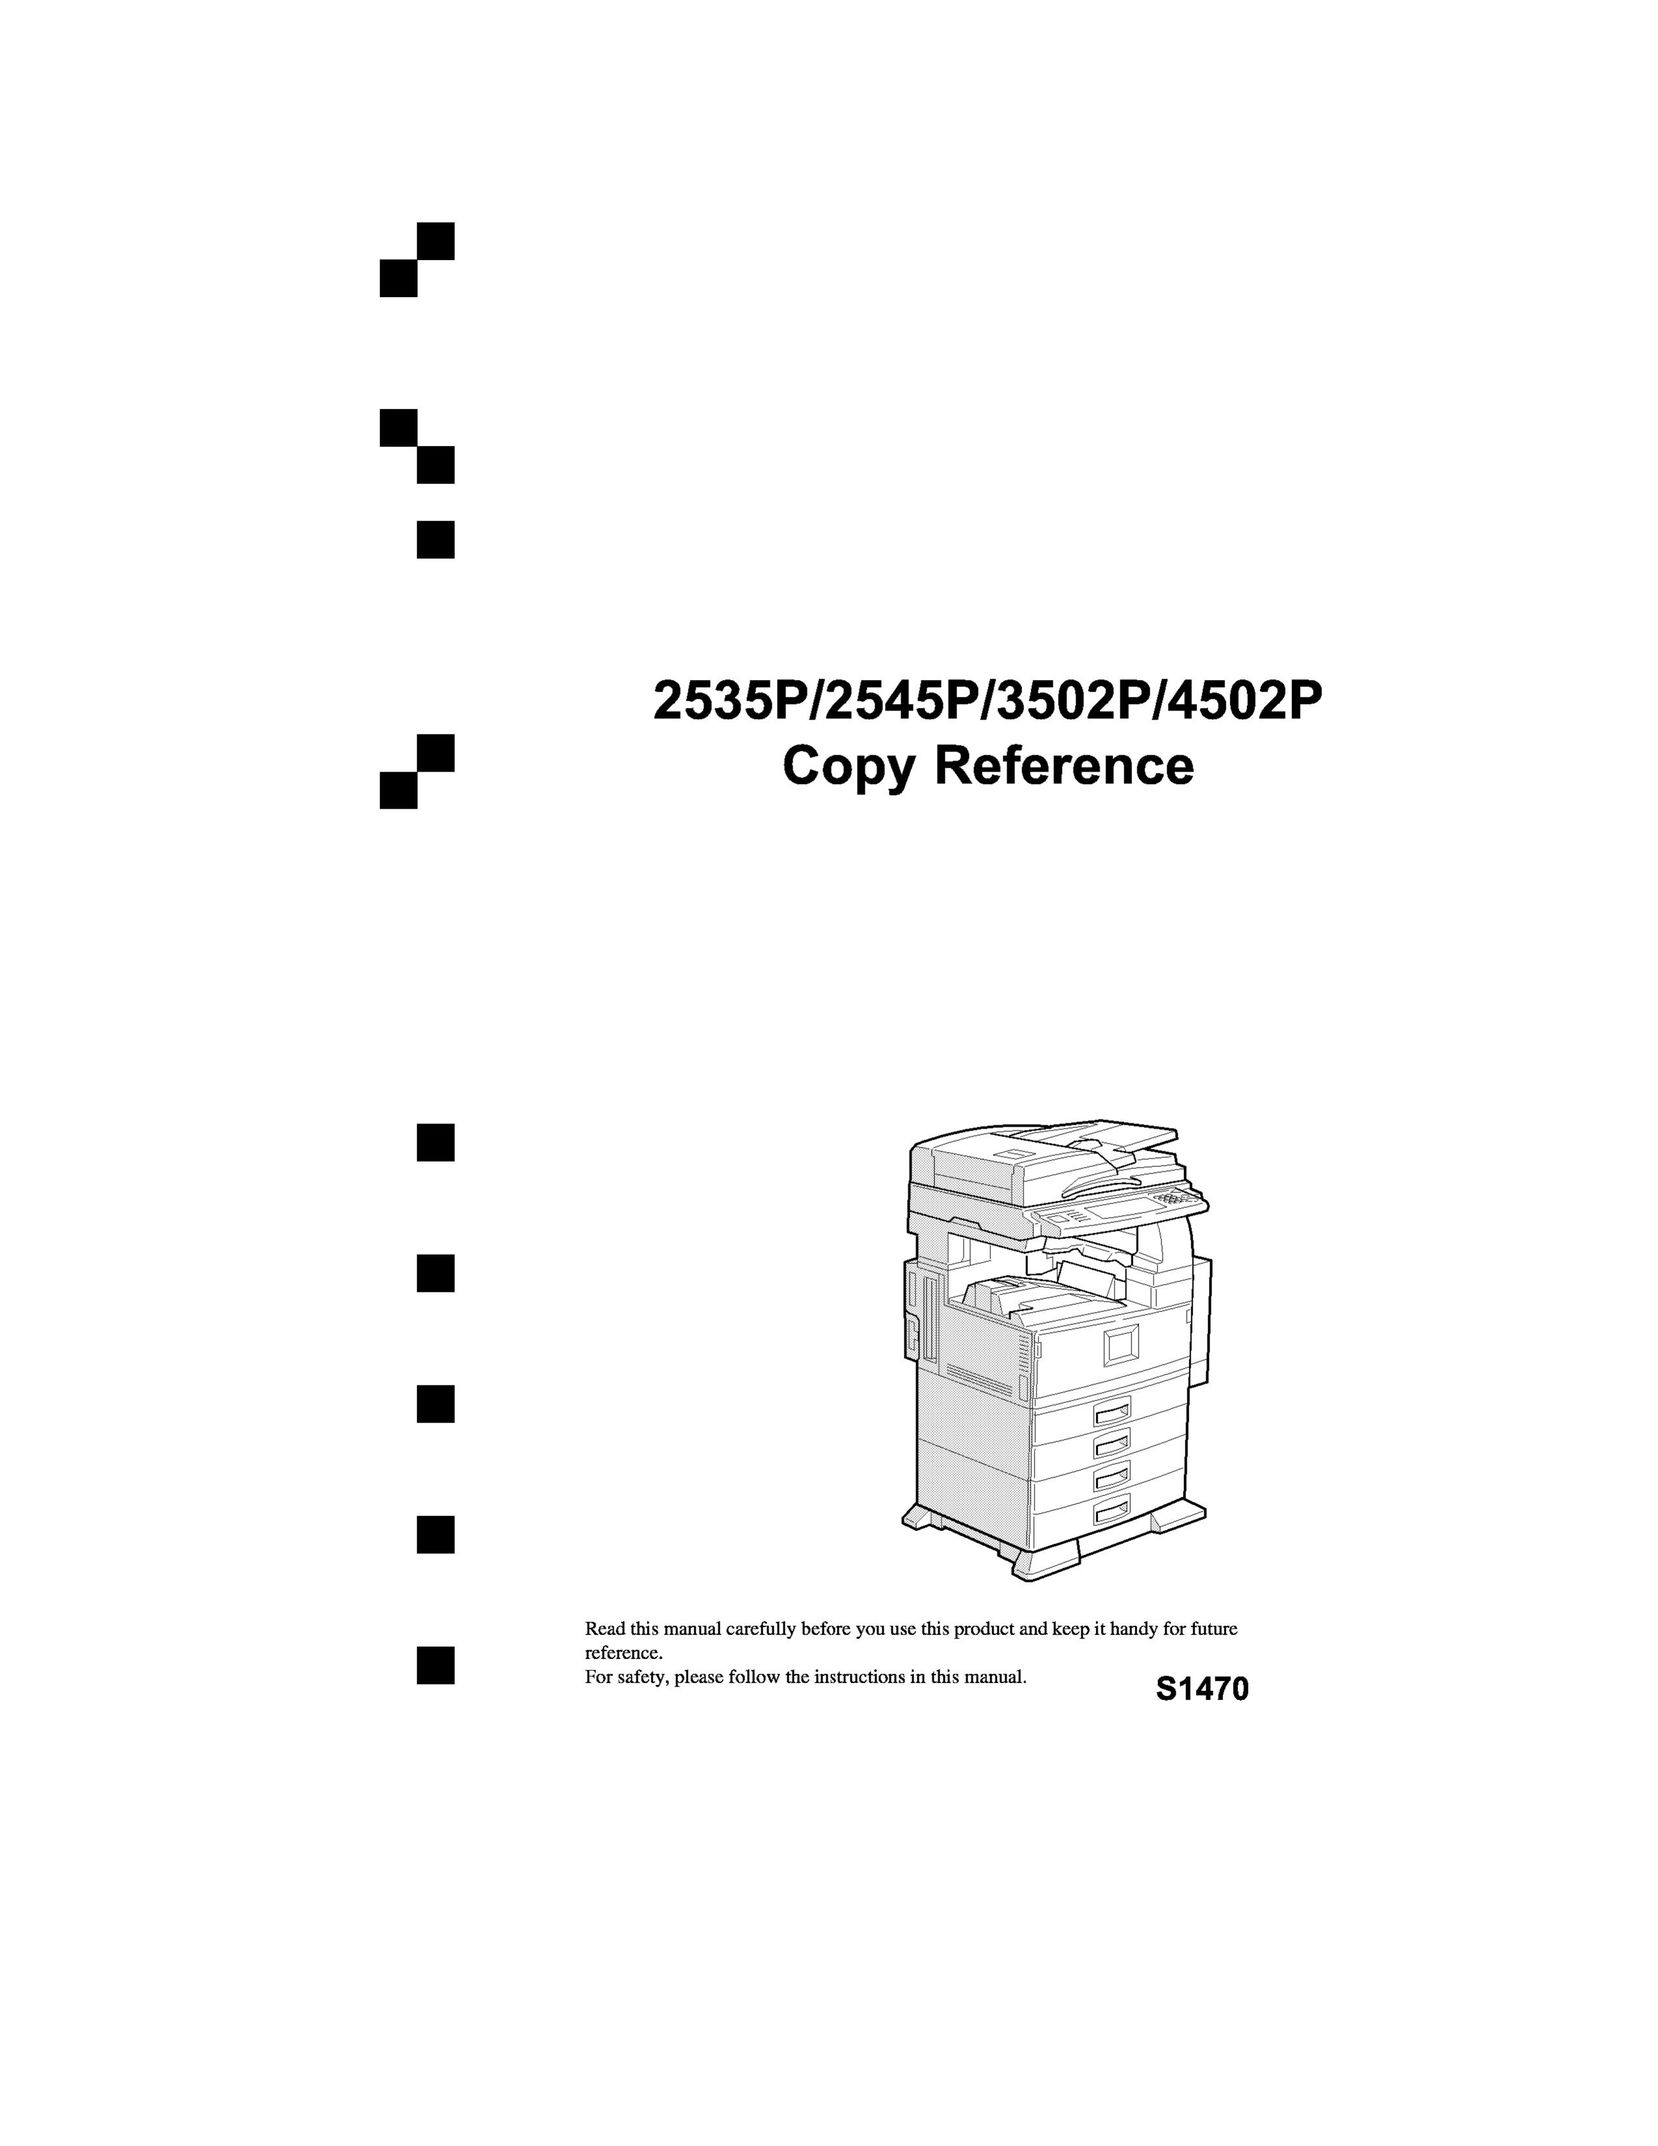 Savin 2545 All in One Printer User Manual